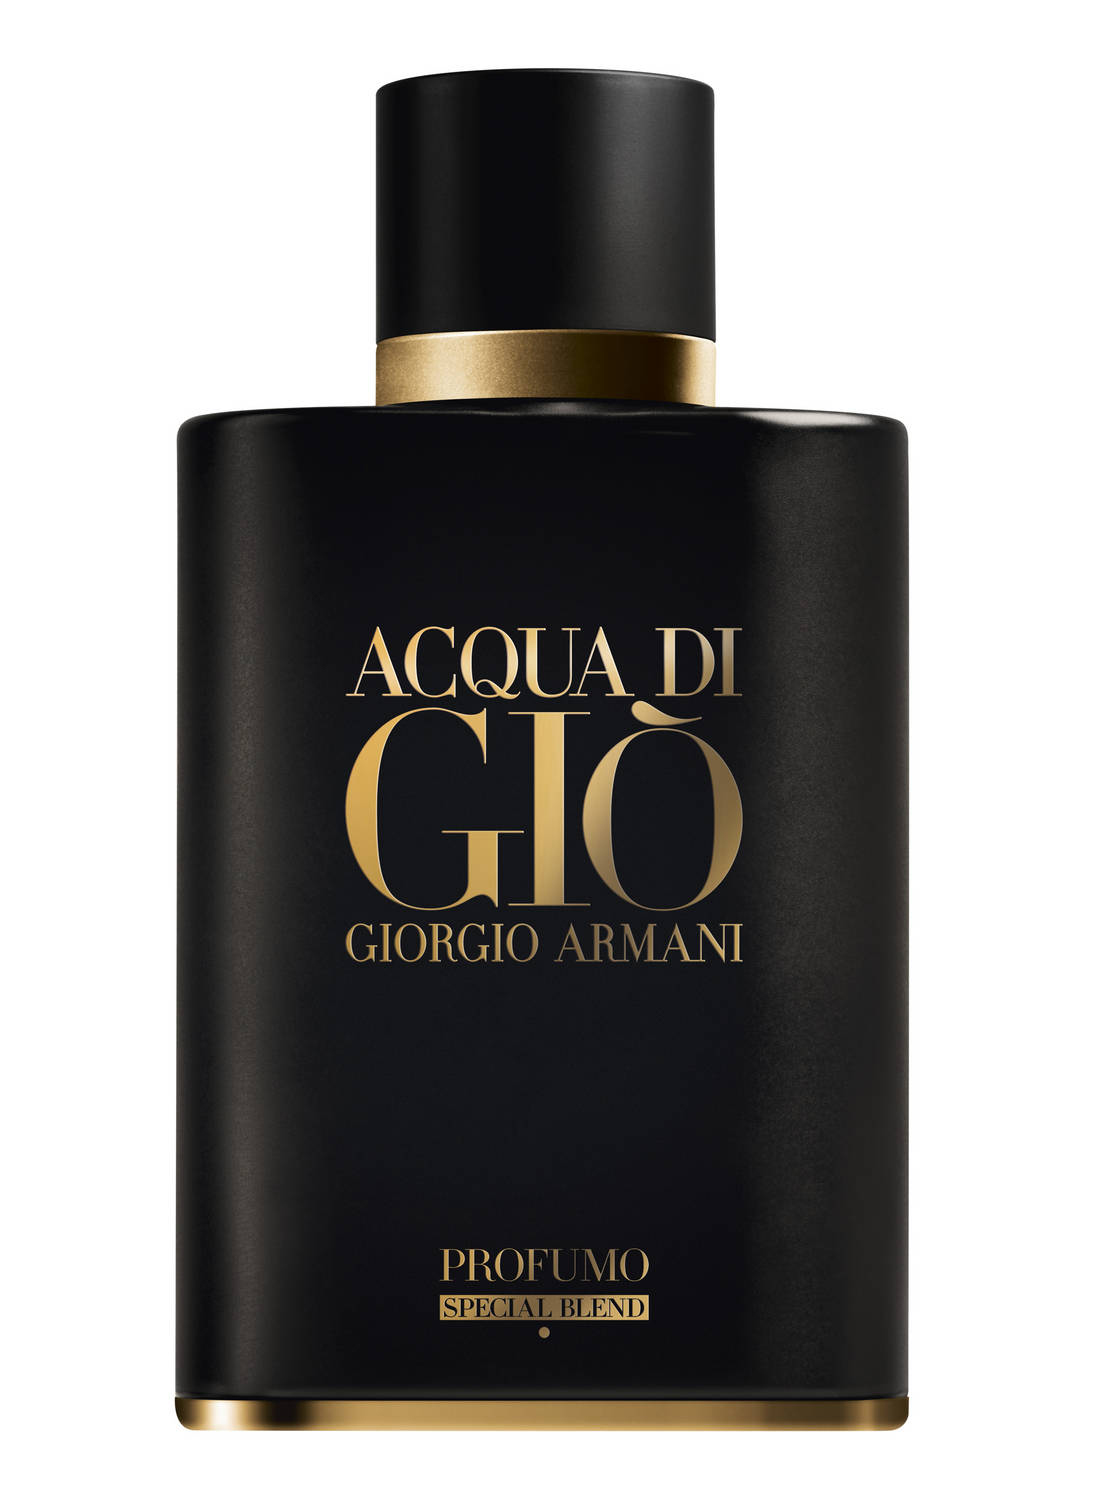 Acqua di Gio Profumo Special Blend Giorgio Armani colônia - a novo